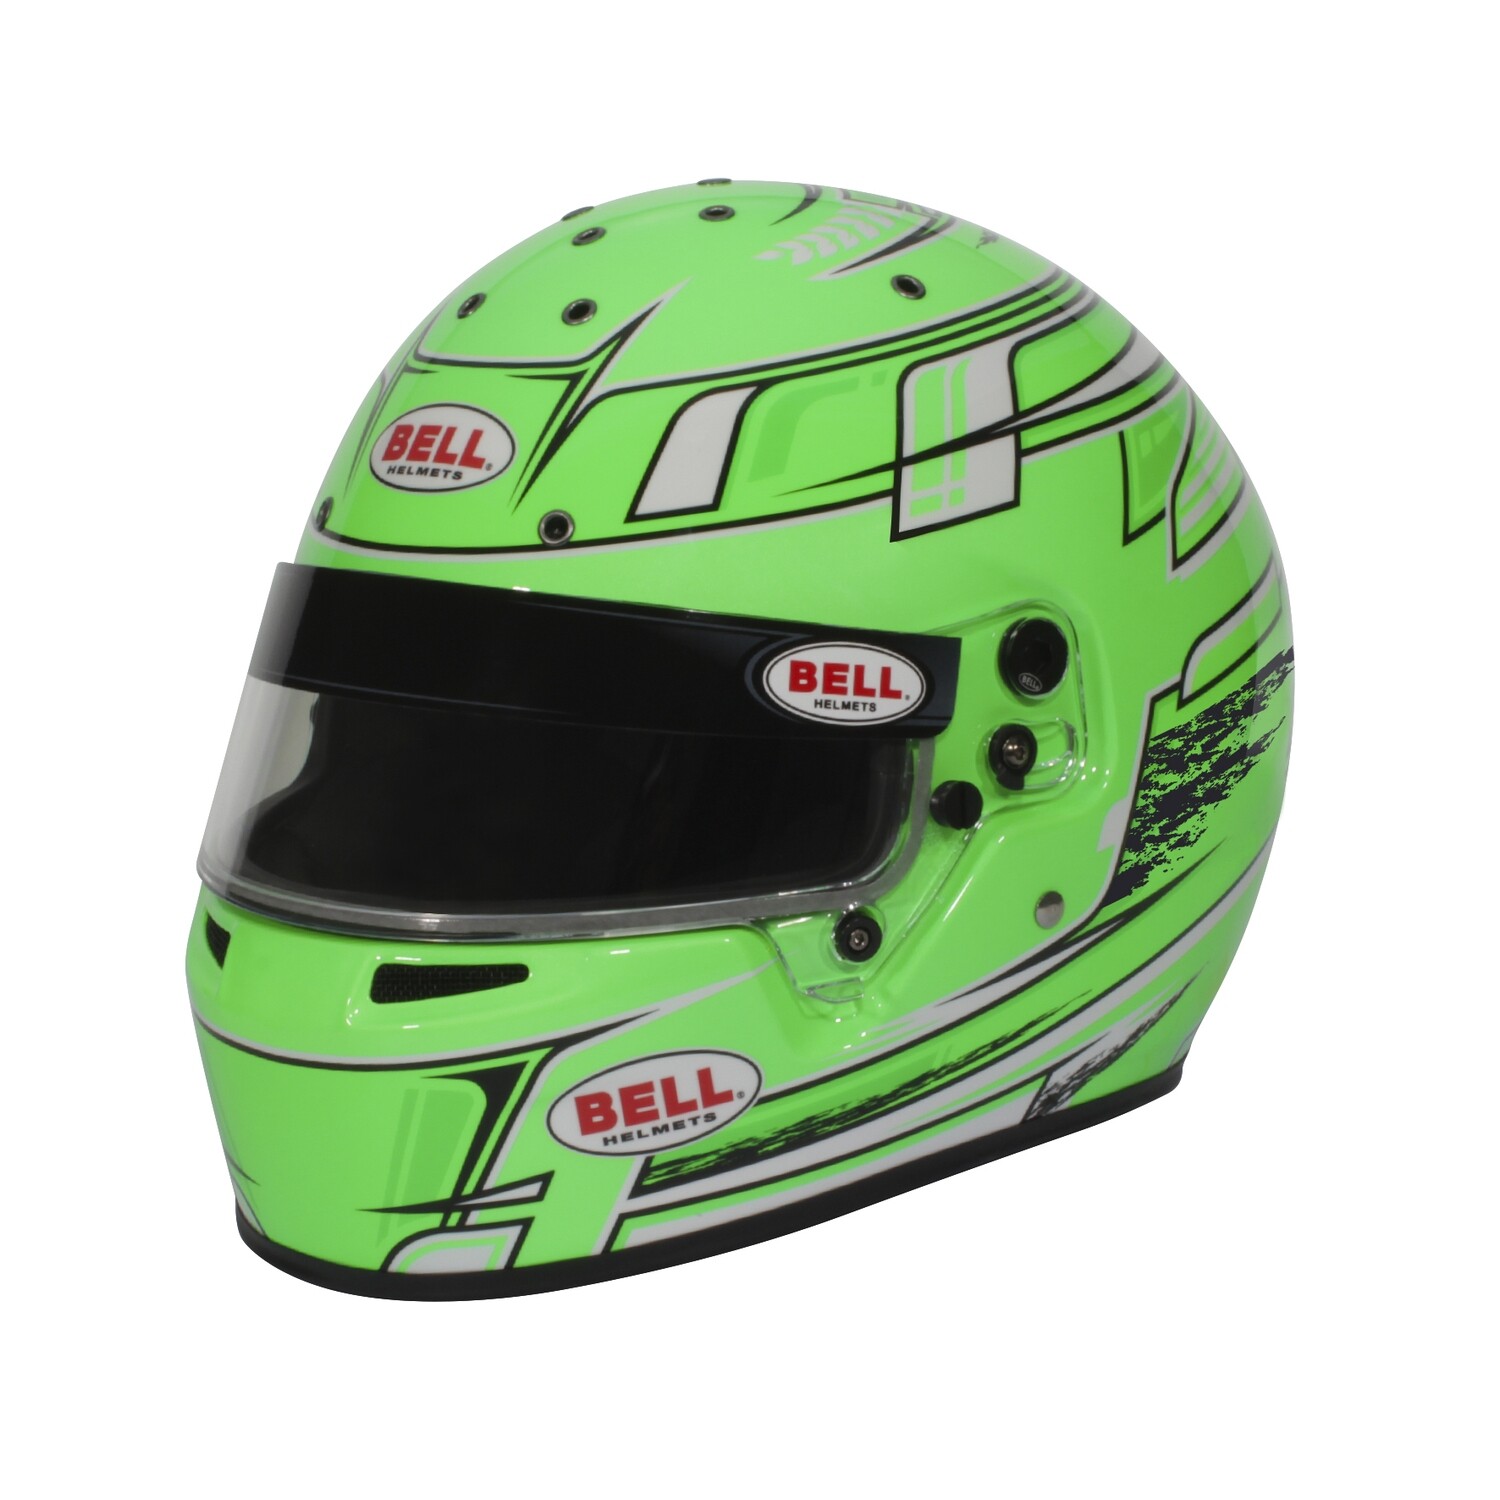 Bell KC7-CMR Champion Green helmet